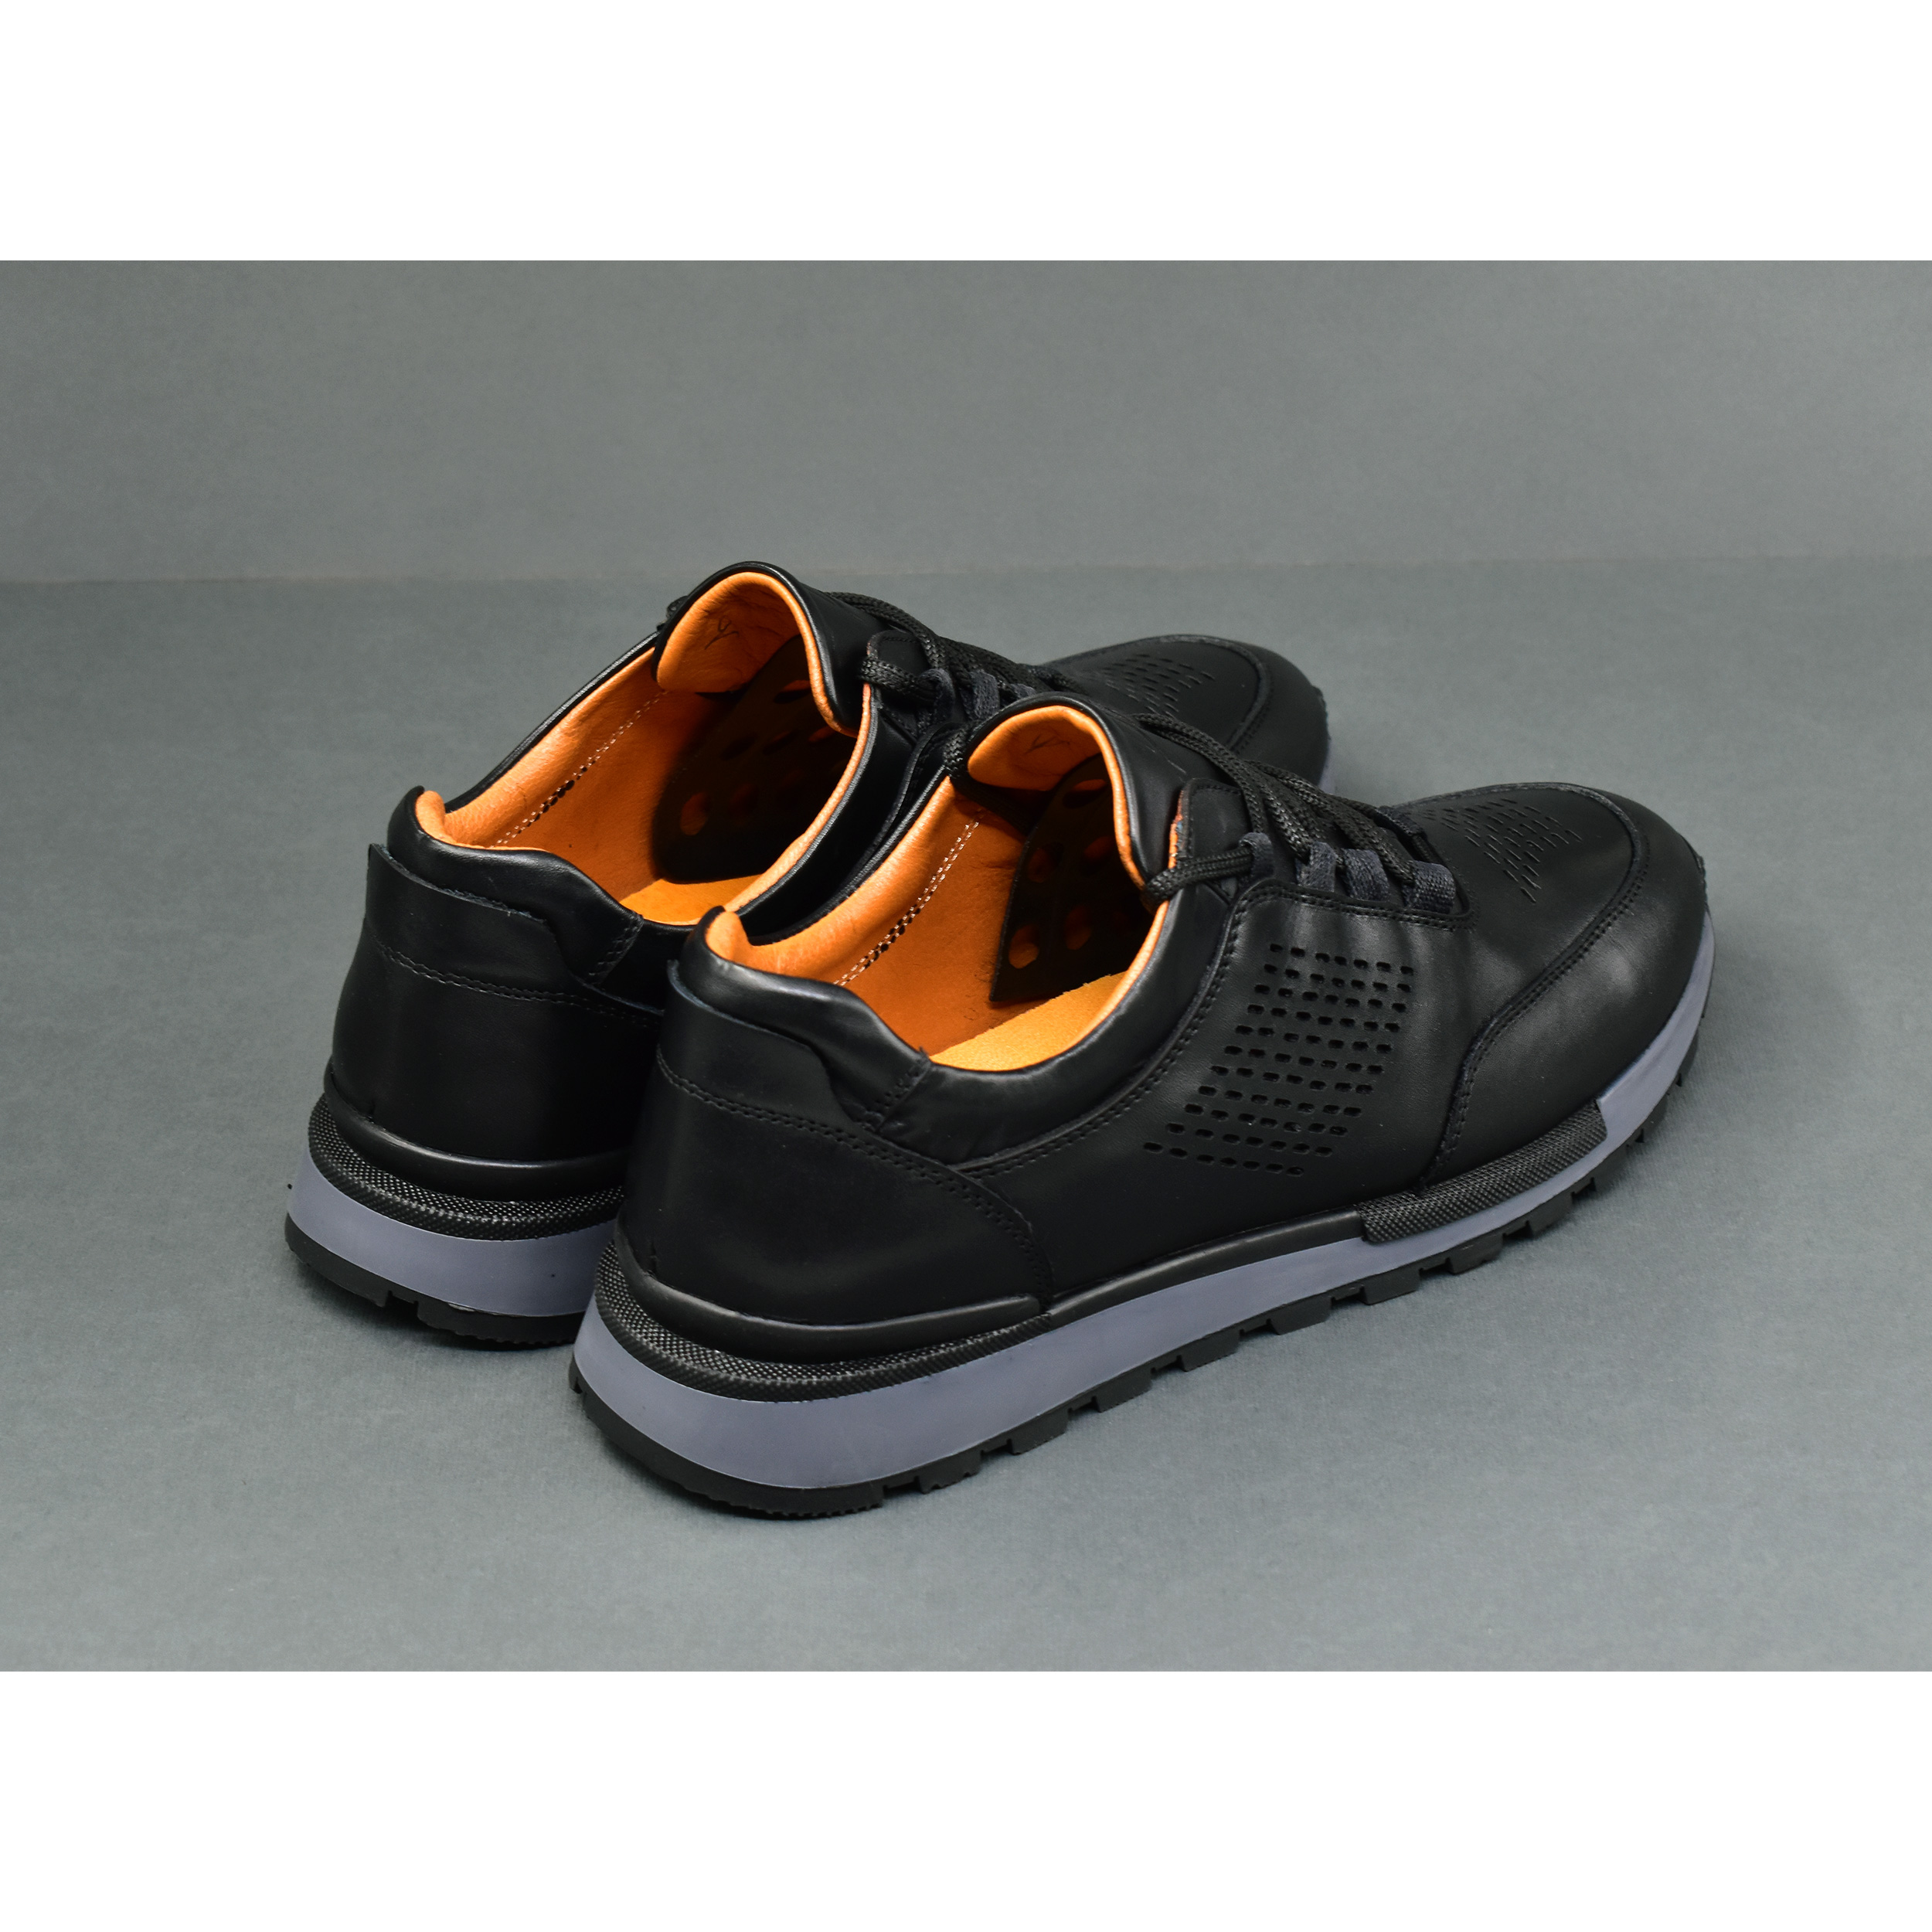 کفش روزمره مردانه پاما مدل ME-644 کد G1804